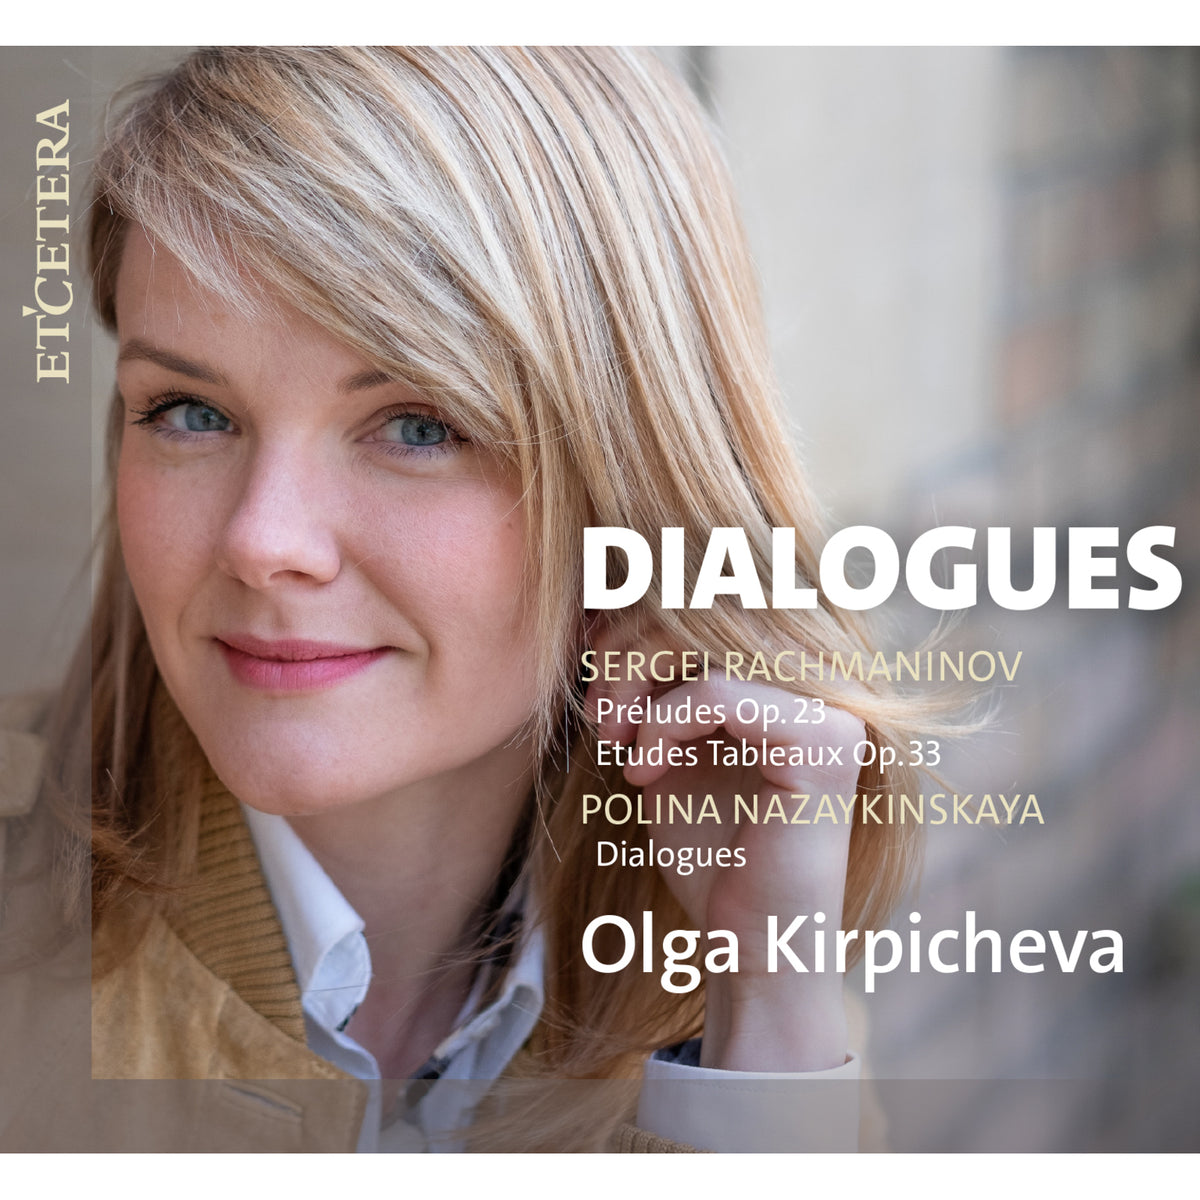 Olga Kirpicheva (piano) - Dialogues - Works for Piano by Rachmaninov and Nazaykinskaya